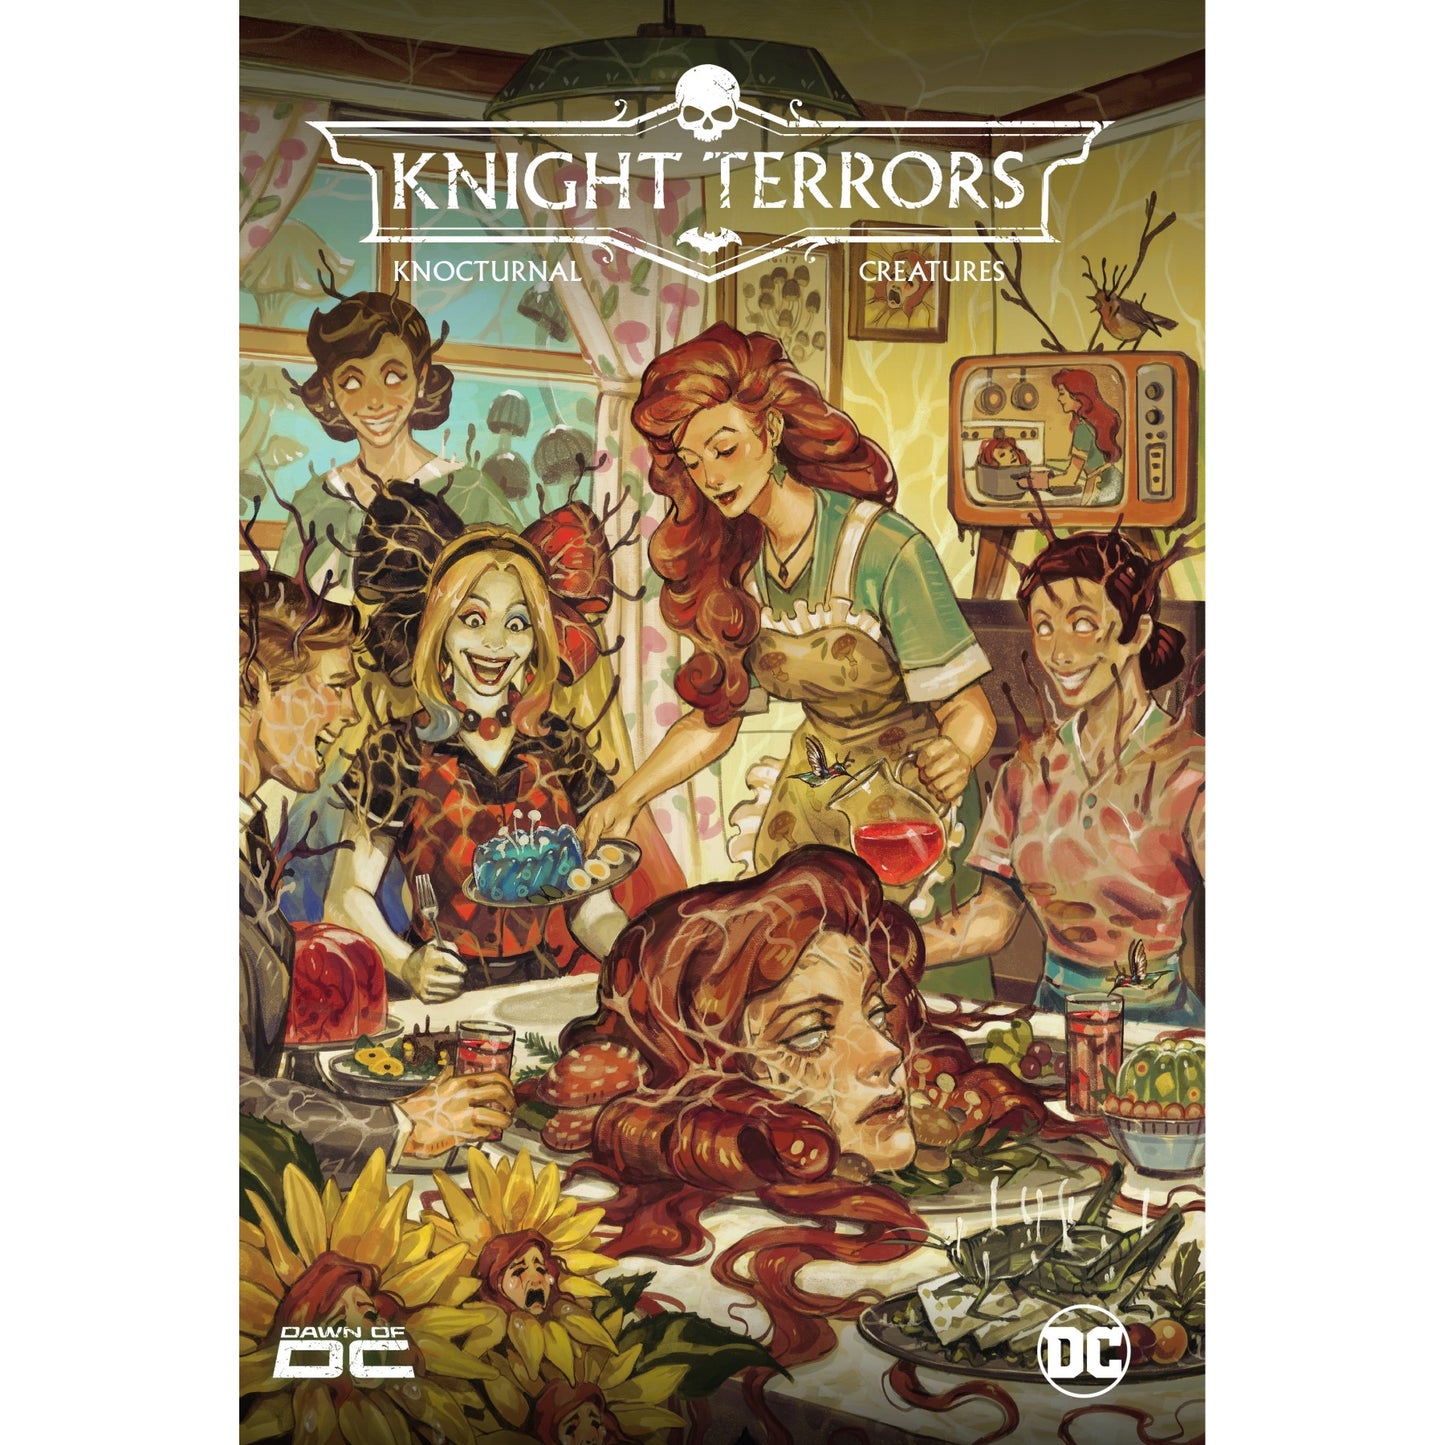 Knight Terrors Vol. 3 Knockturnal Creatures